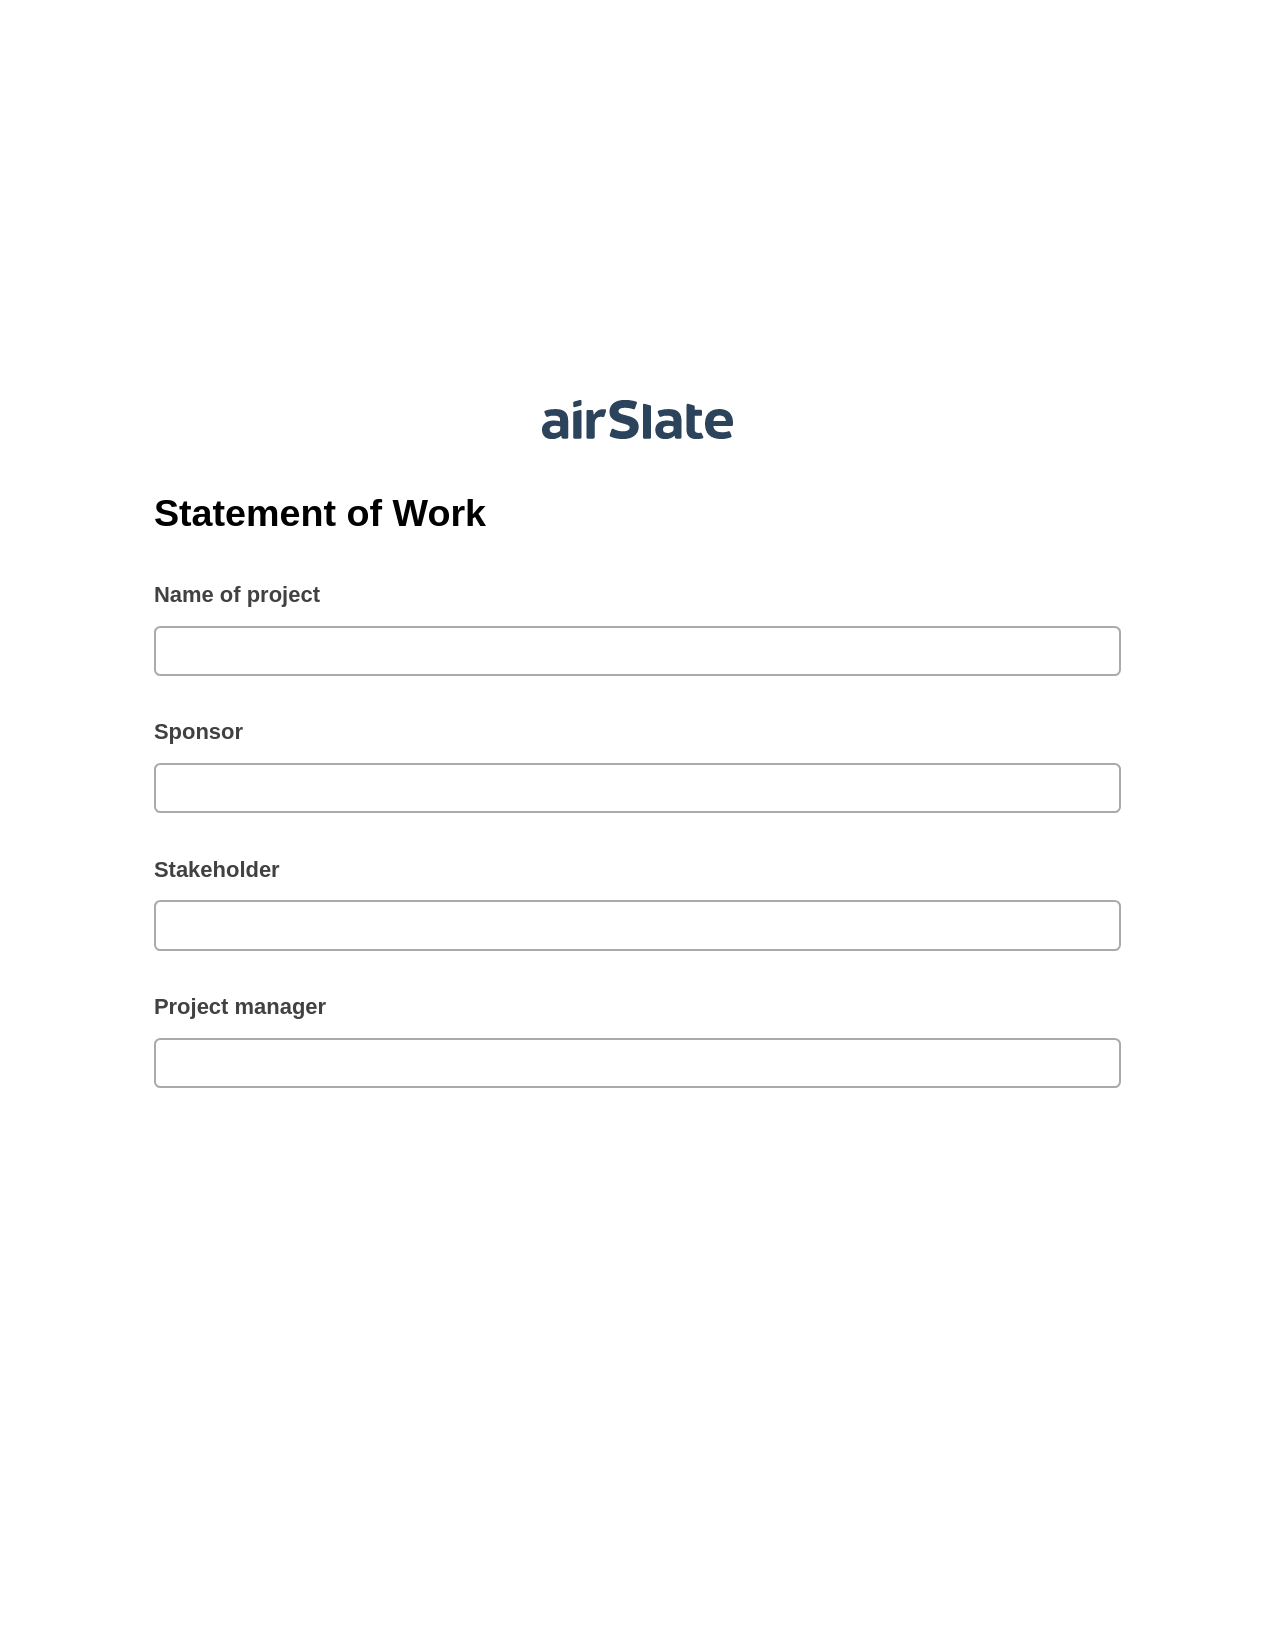 Statement of Work Pre-fill from Google Sheet Dropdown Options Bot, Create slate addon, Google Drive Bot